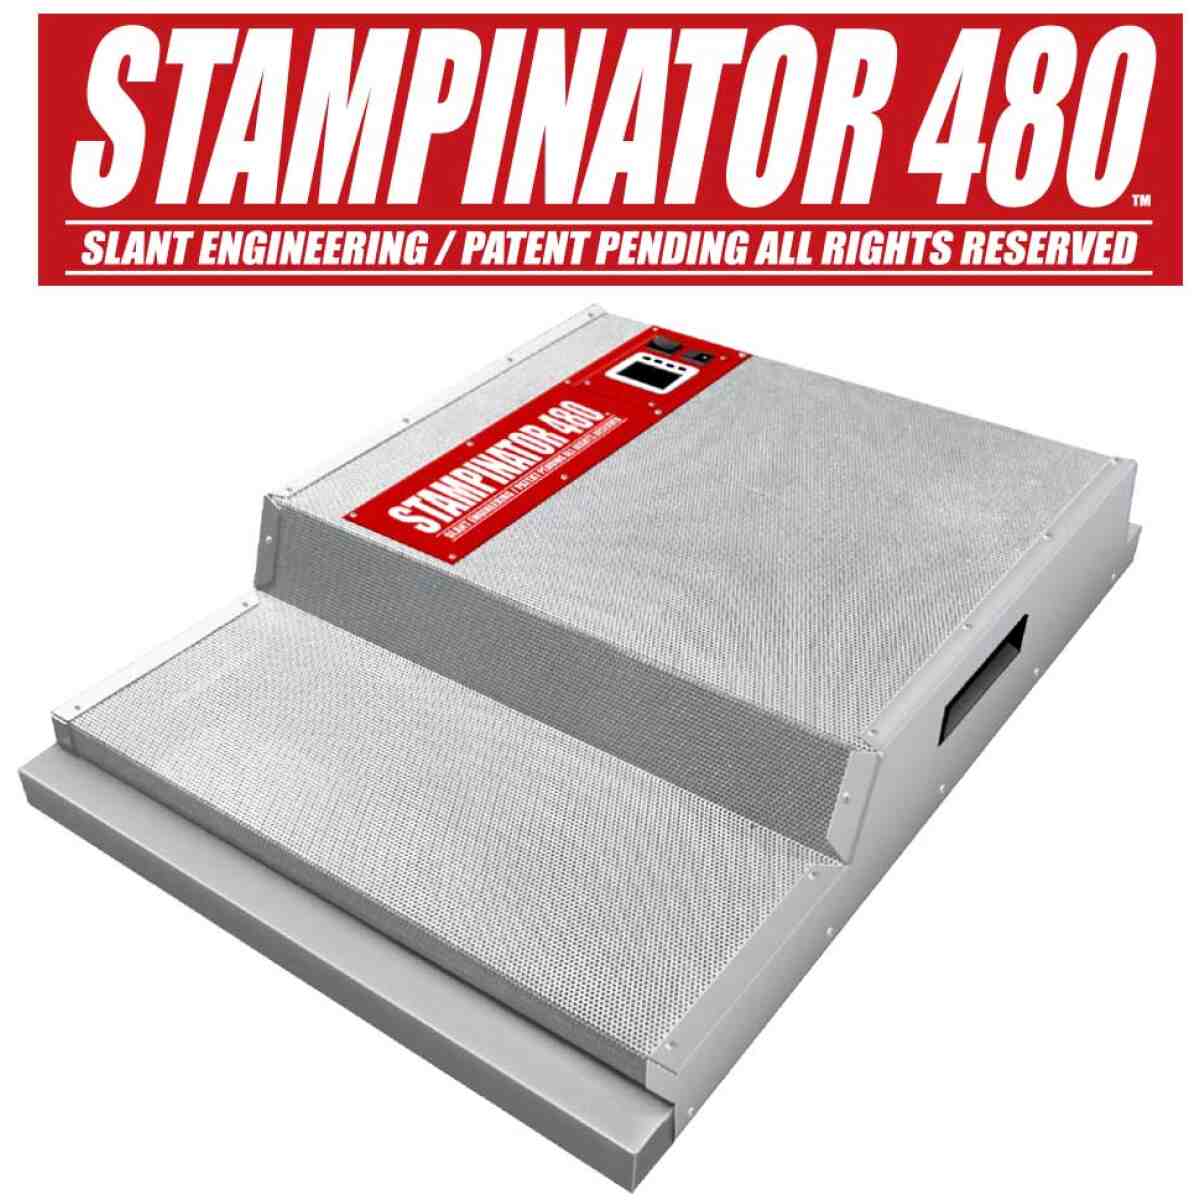 Stampinator 480 SLANT ENGINEERING®